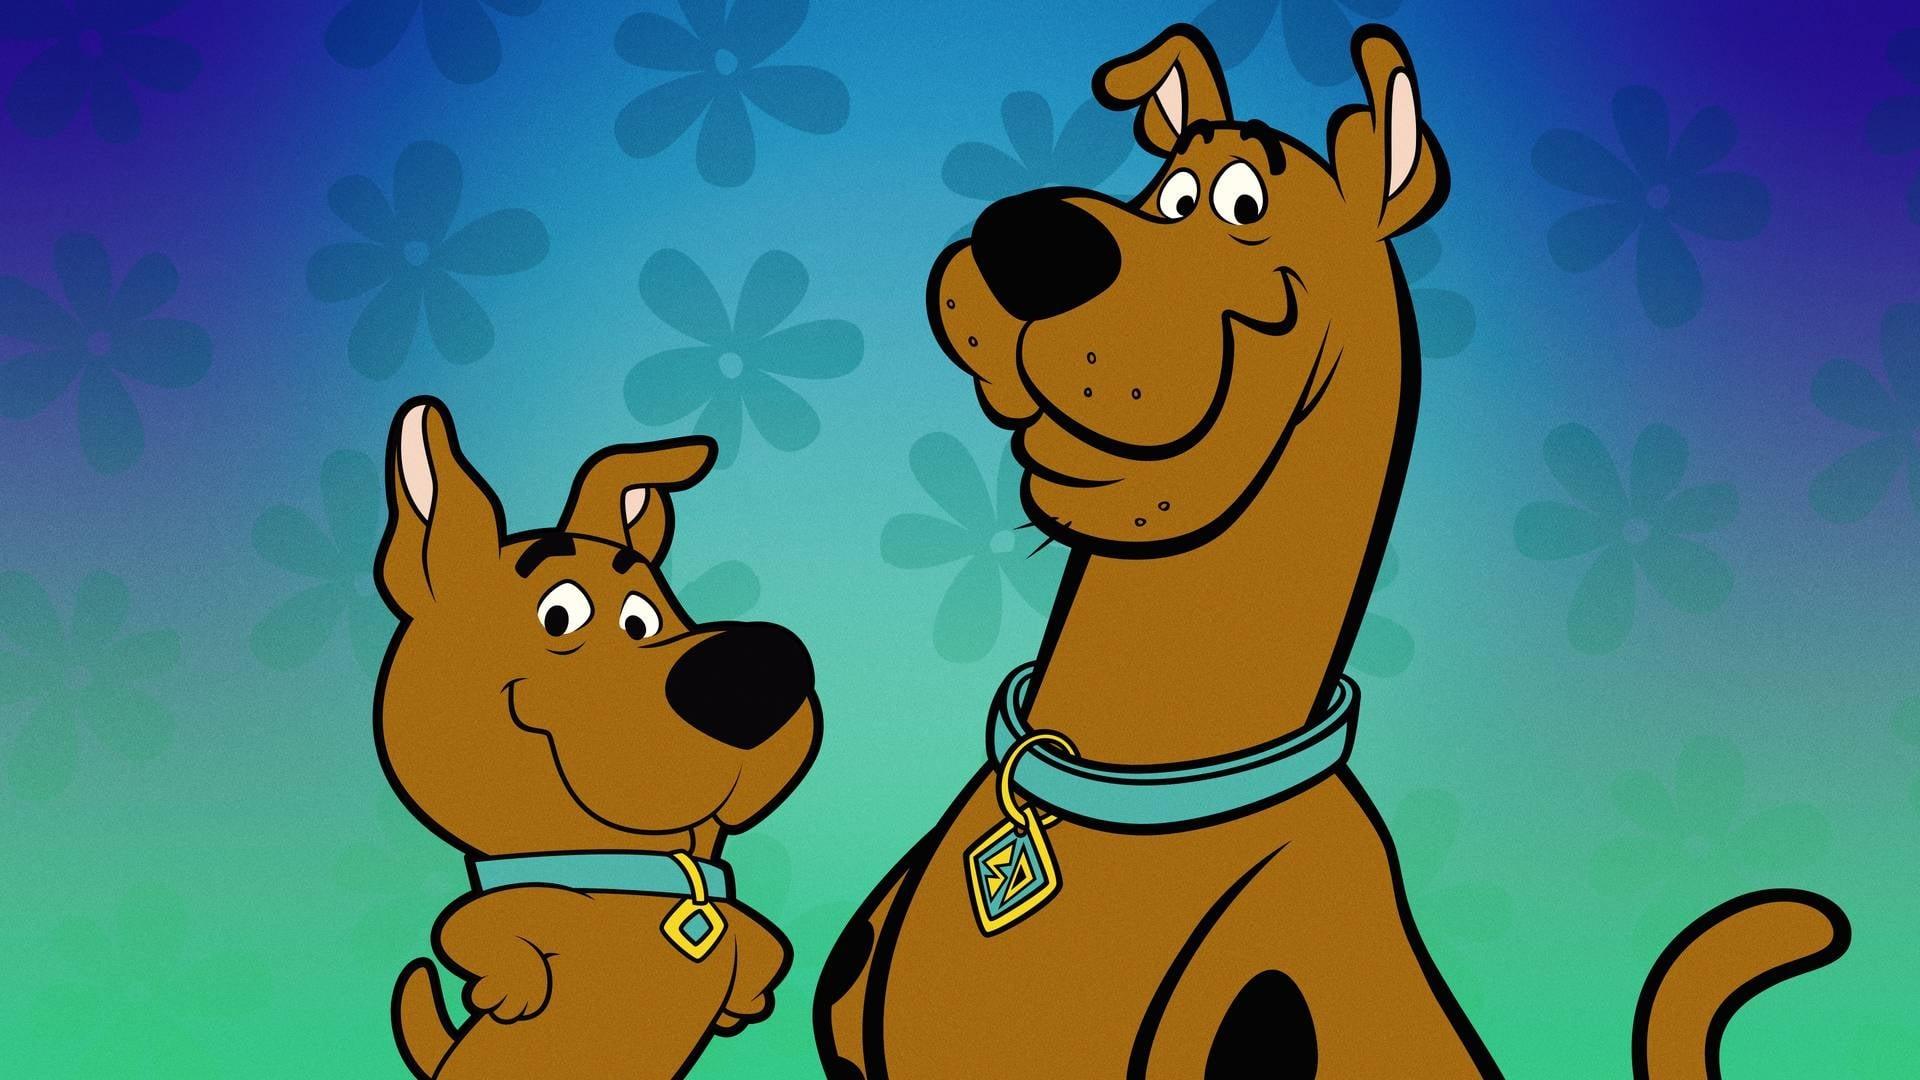 Scooby-Doo and Scrappy-Doo backdrop